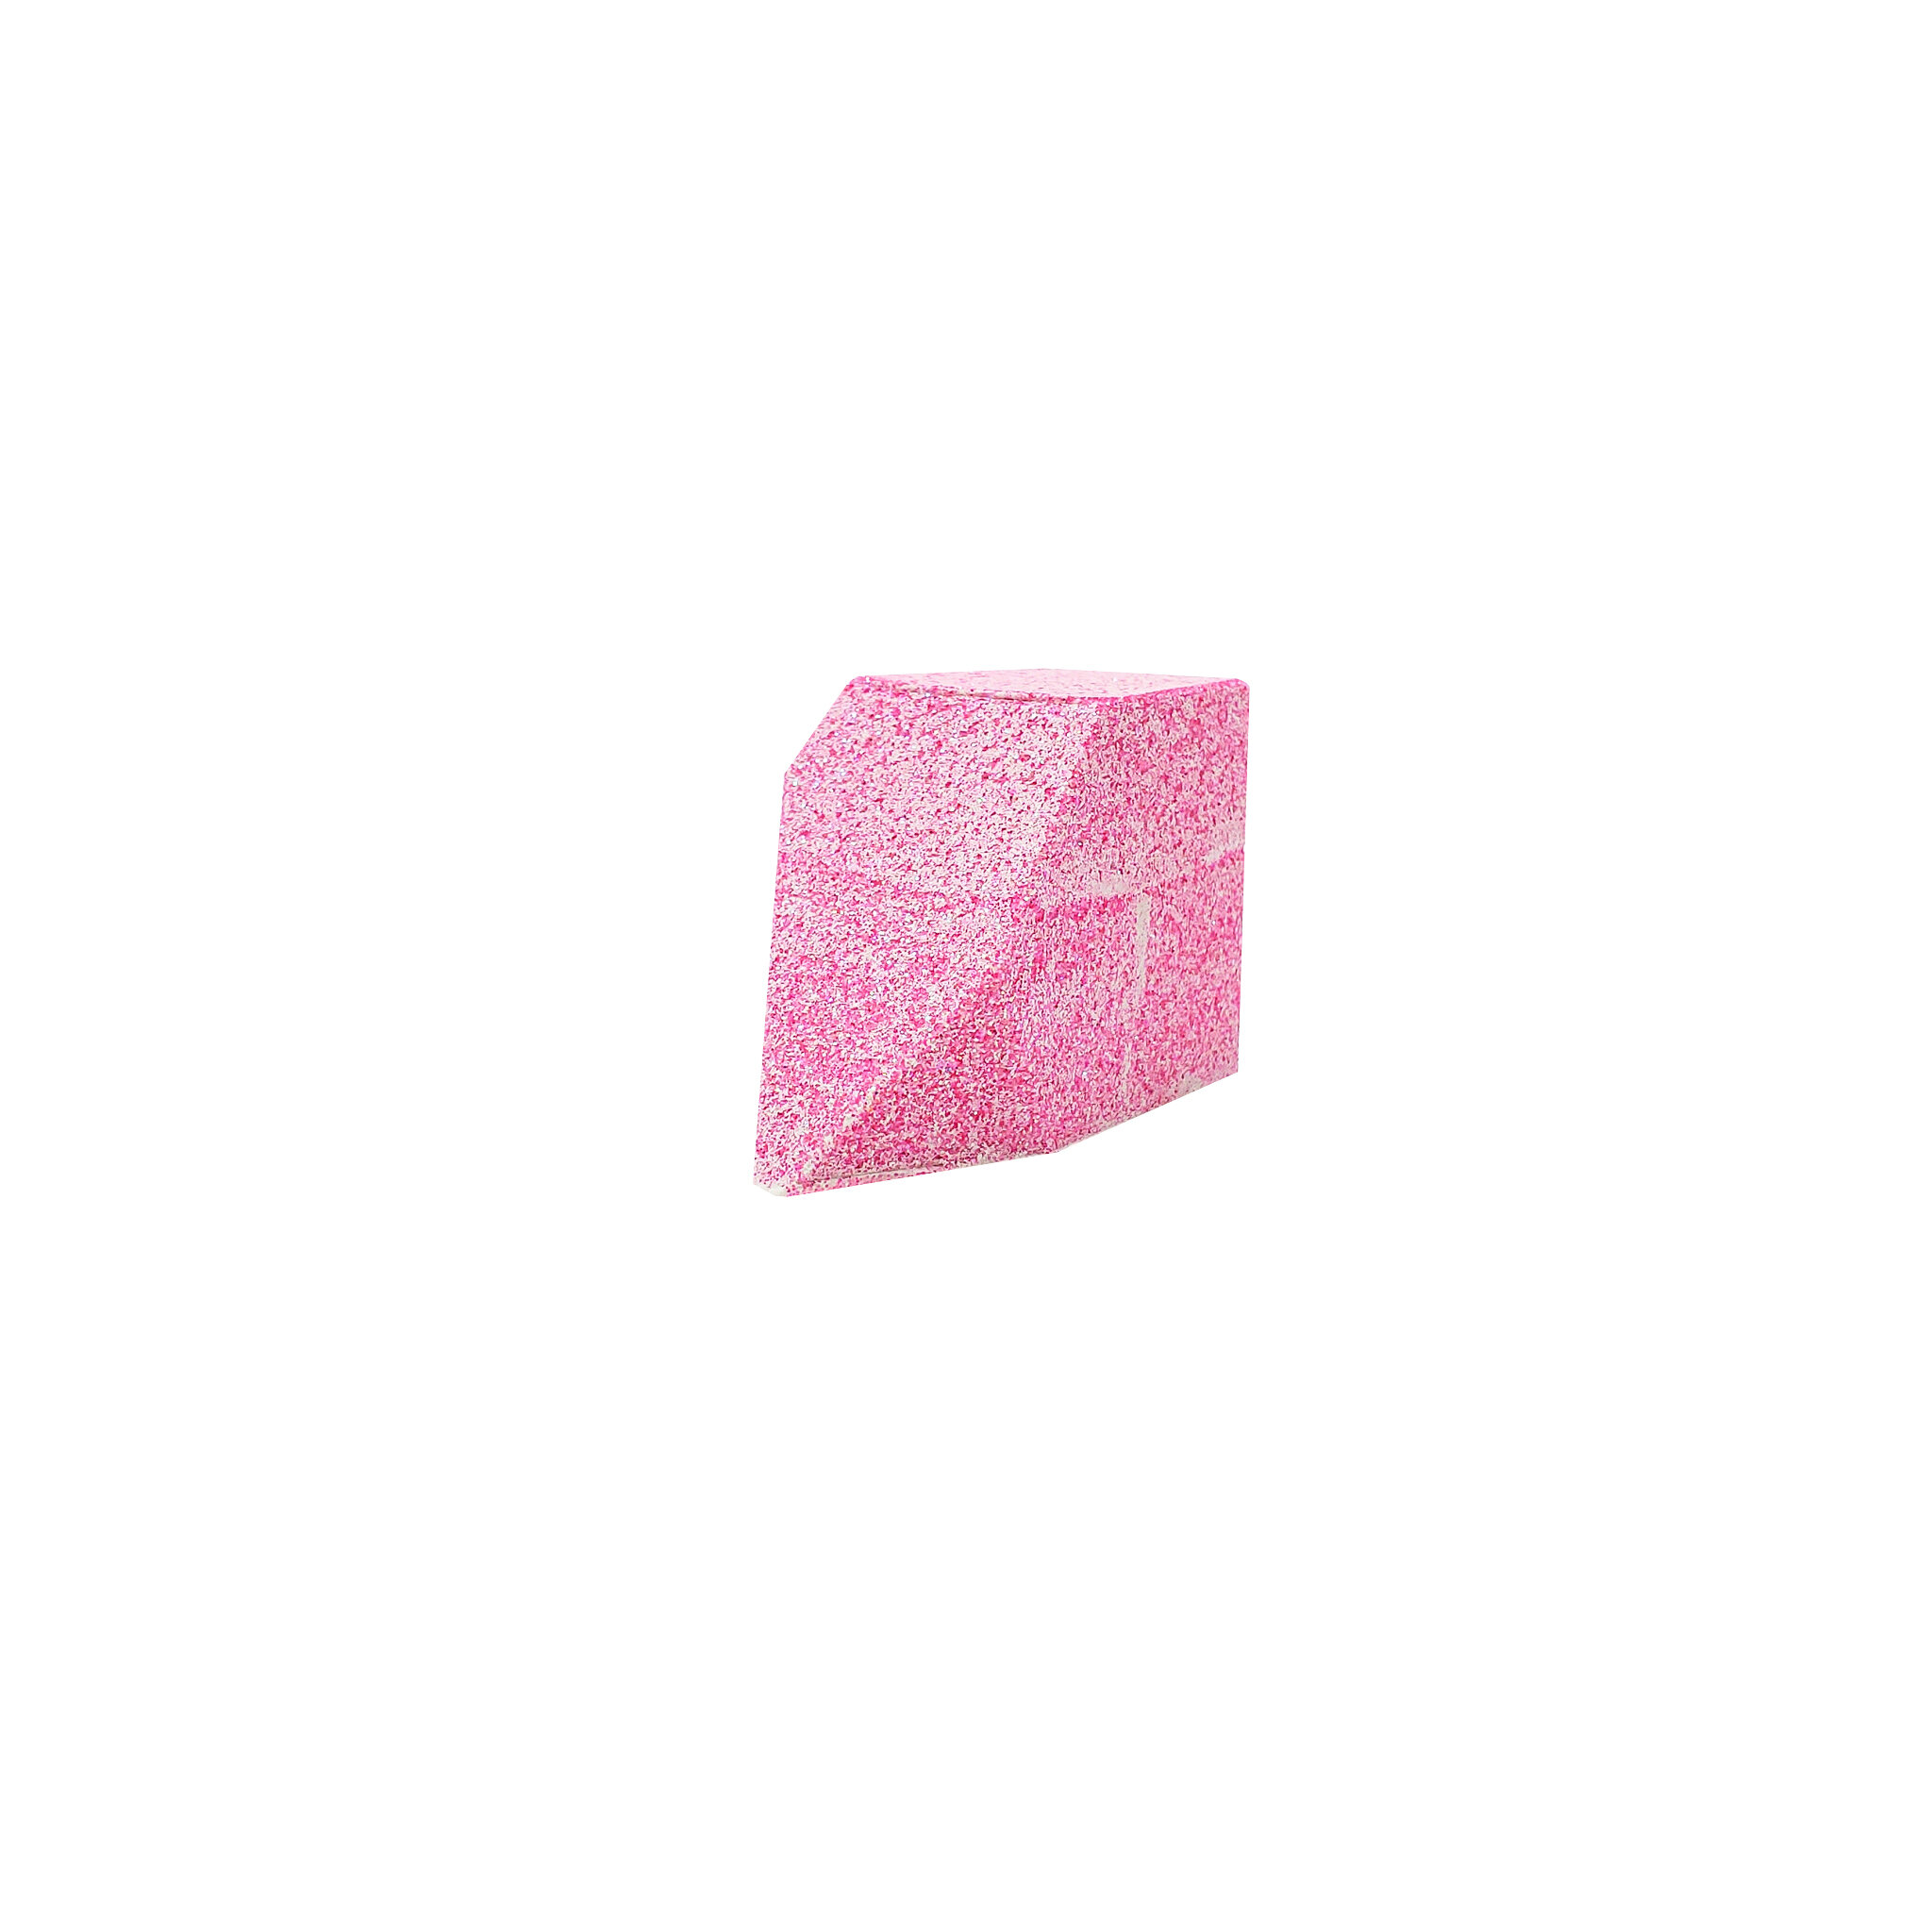 Pink Sugar Shard on White.jpg